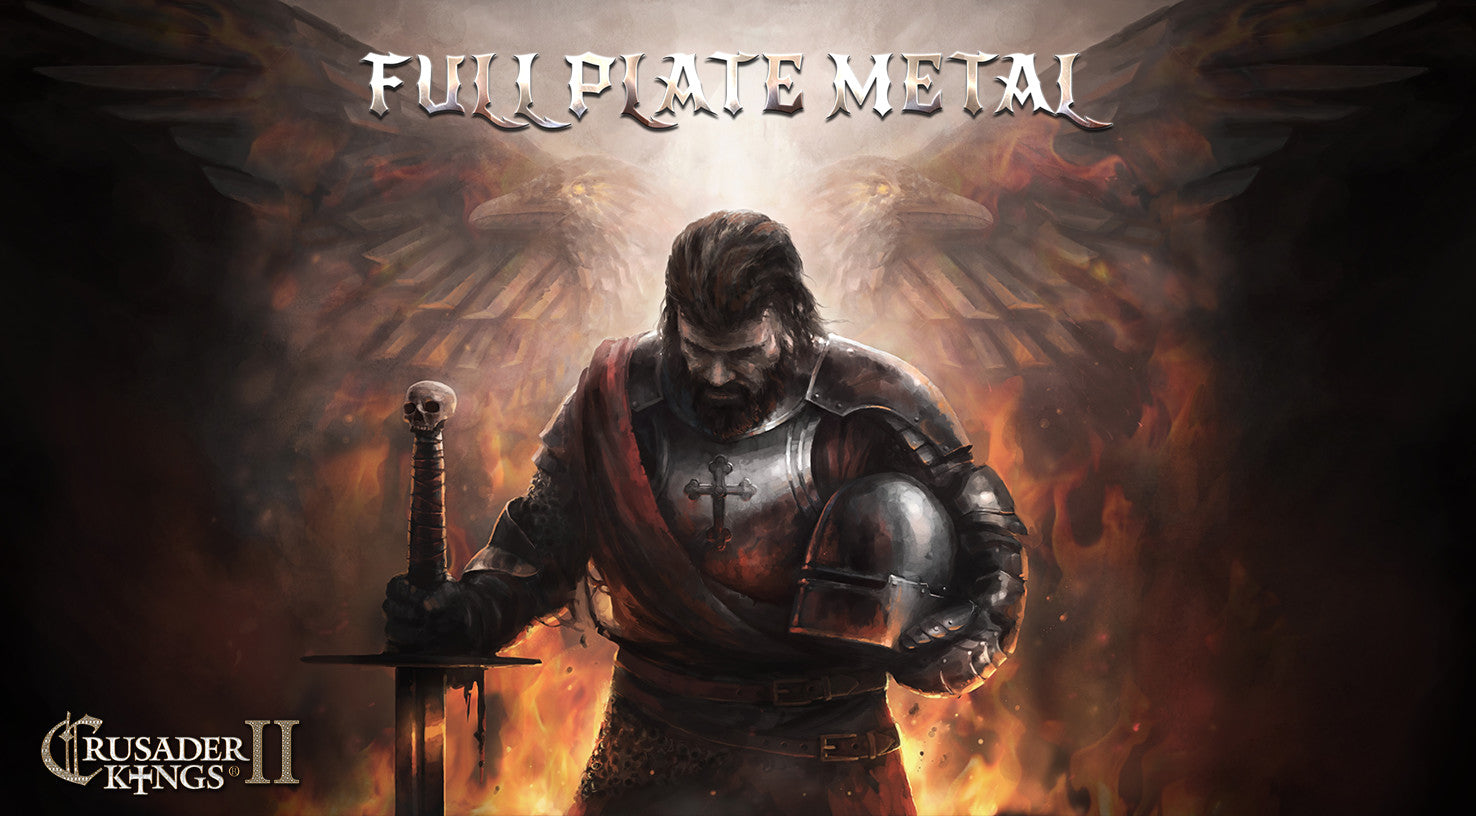 Crusader Kings II - Full Plate Metal DLC